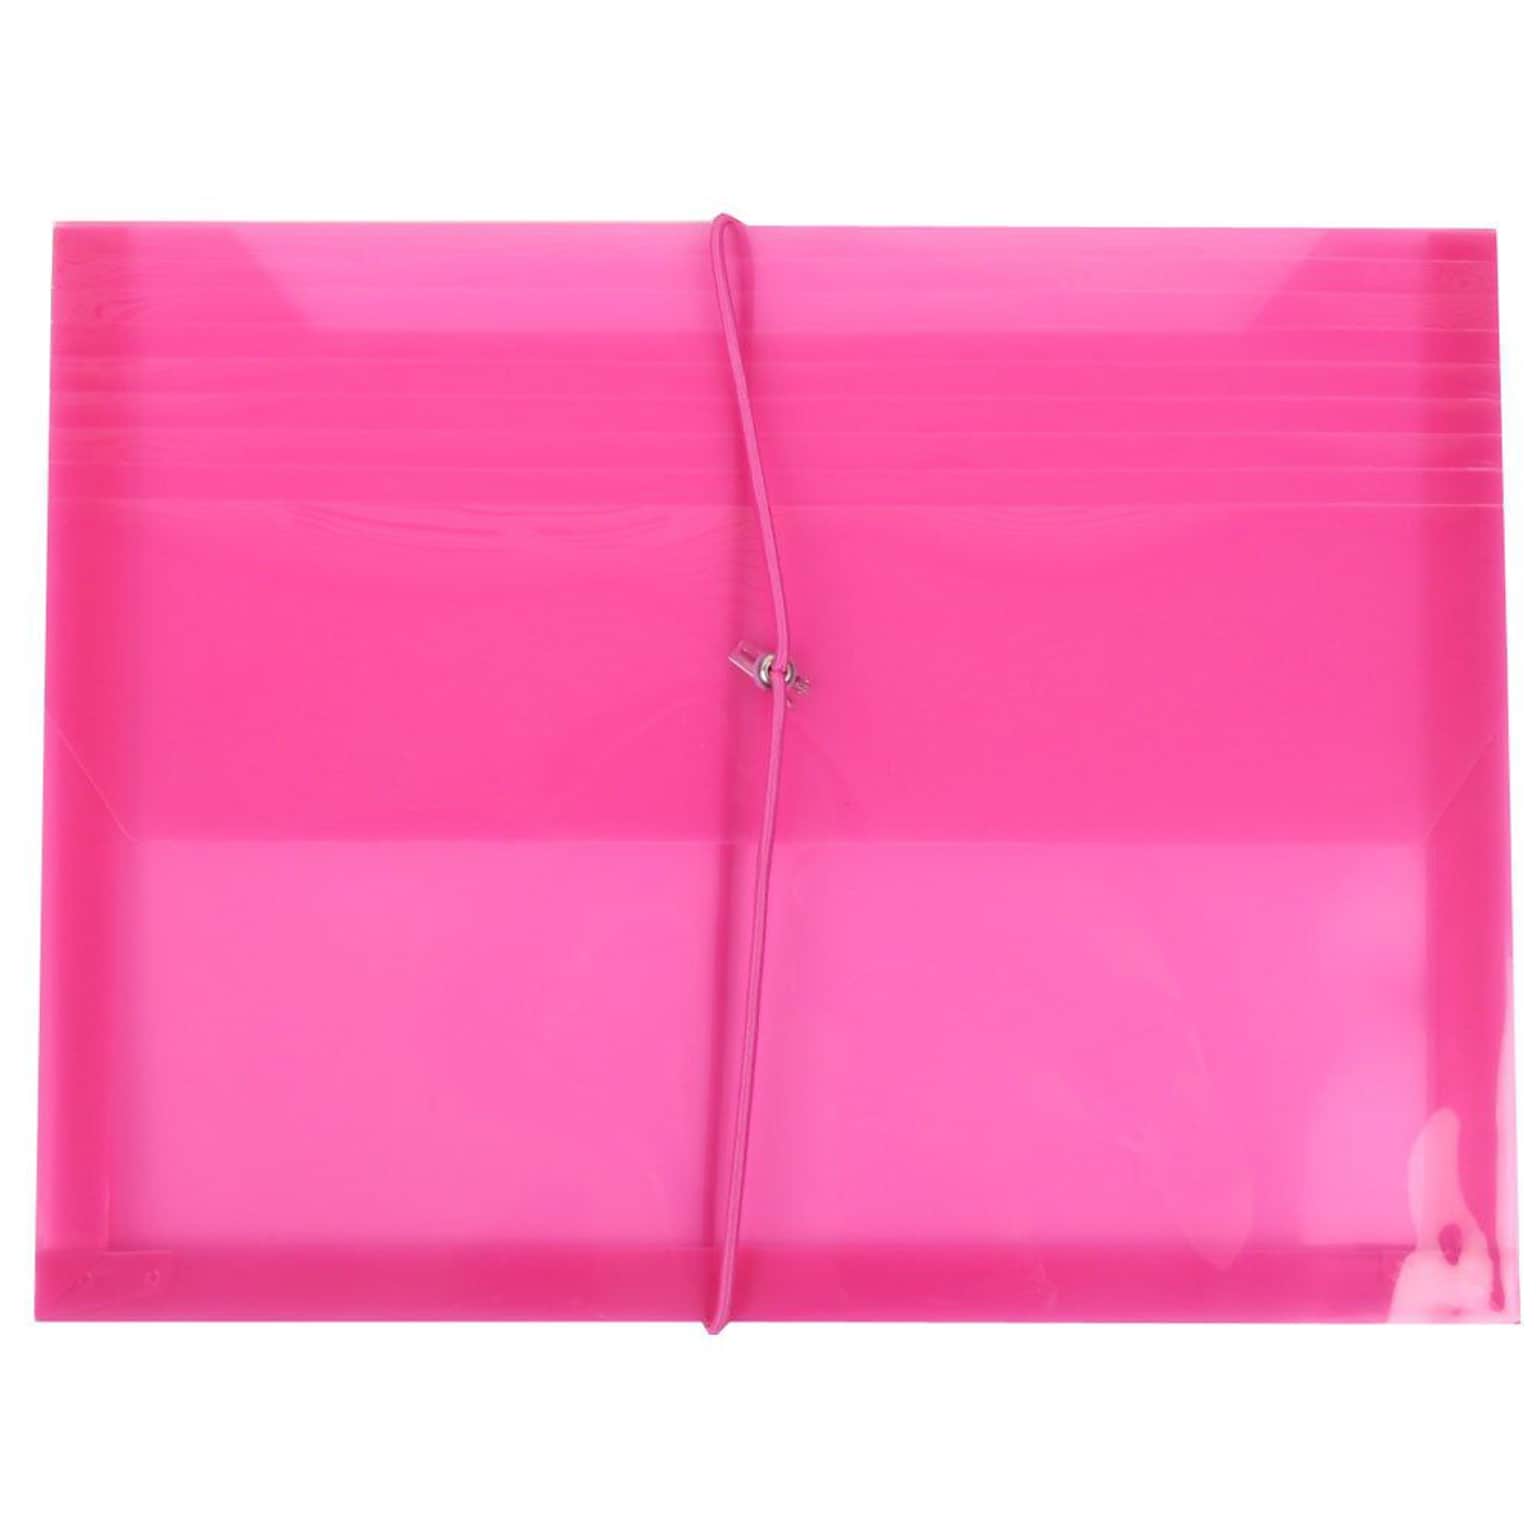 JAM Paper® Plastic Envelopes with 2 5/8 Expansion, Elastic Closure, Letter Booklet, 9.75x13, Fuchsia Pink Poly, 1/pk (218E25FU)